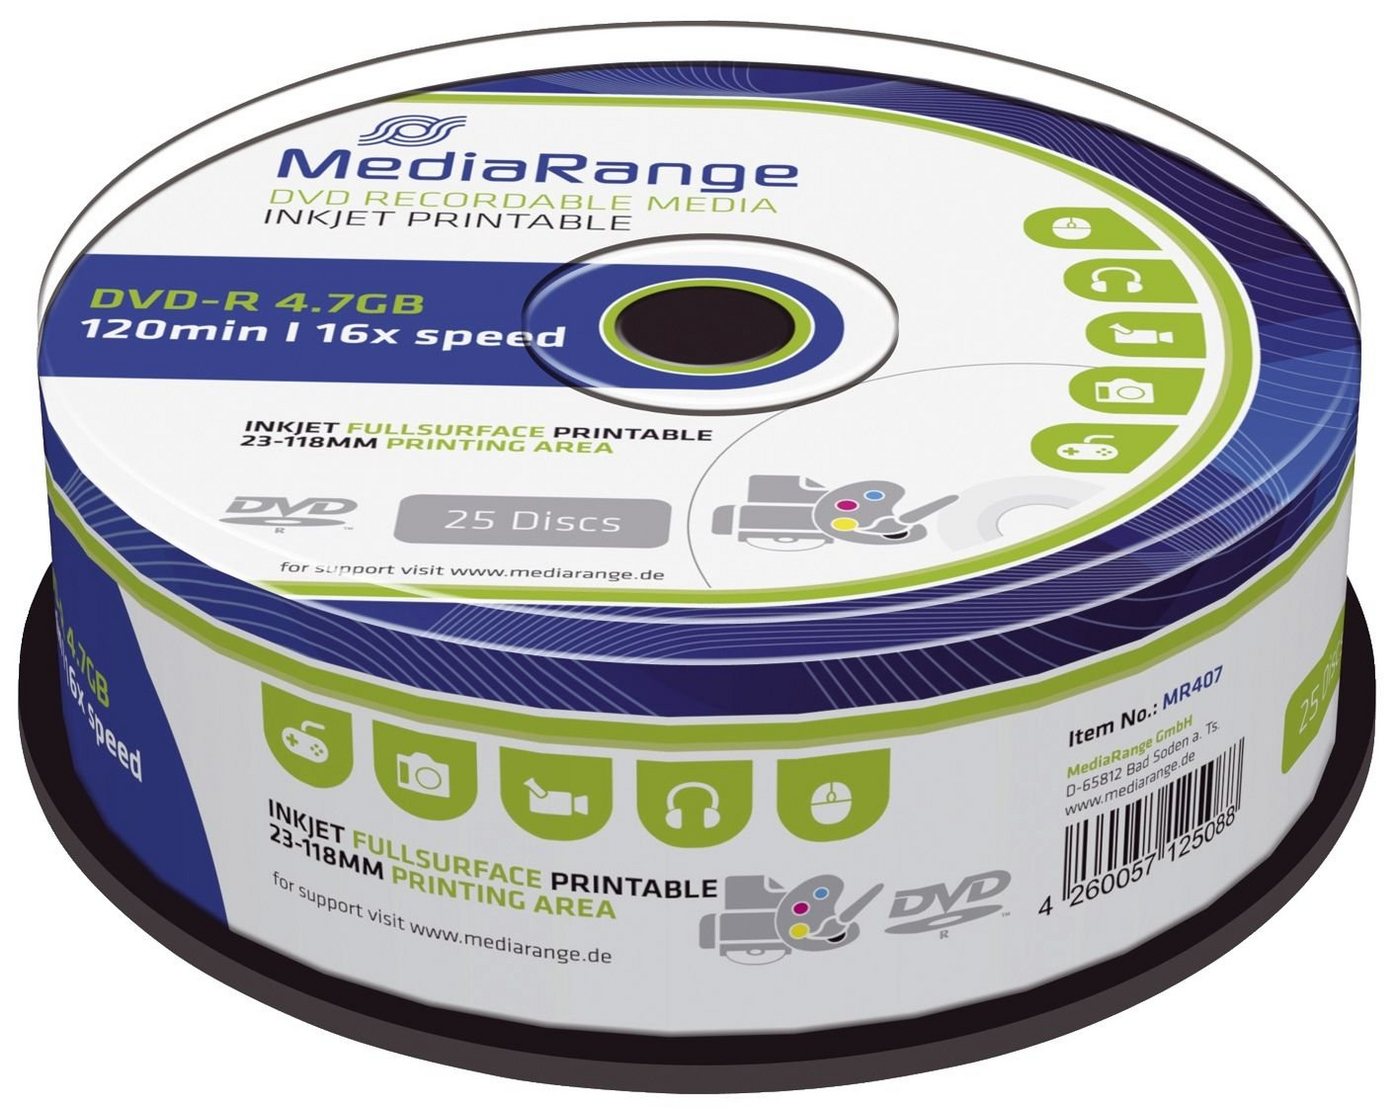 Mediarange Handgelenkstütze MediaRange DVD-R 4.7GB 25pcs Spindel 16x Inkjet Full Printa von Mediarange